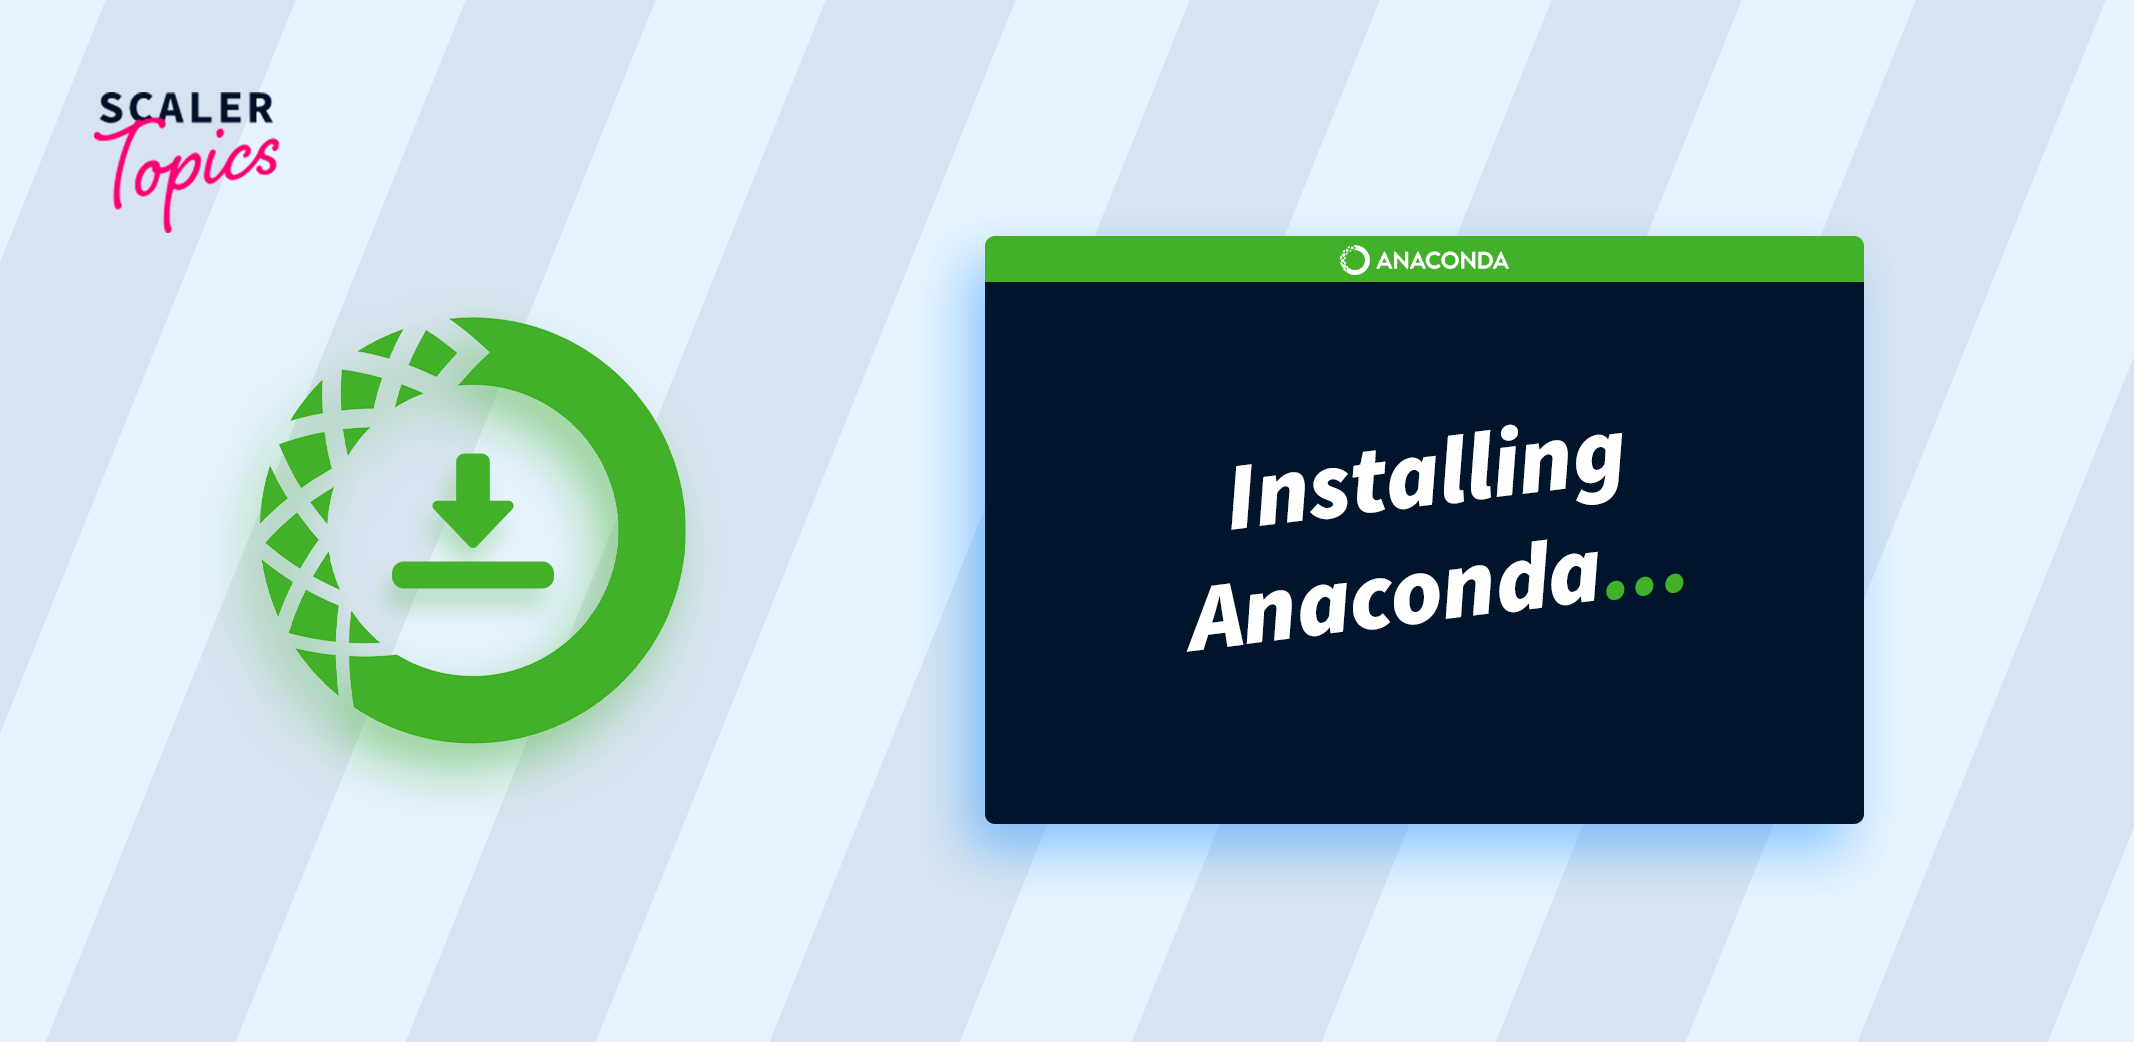 anaconda navigator install package